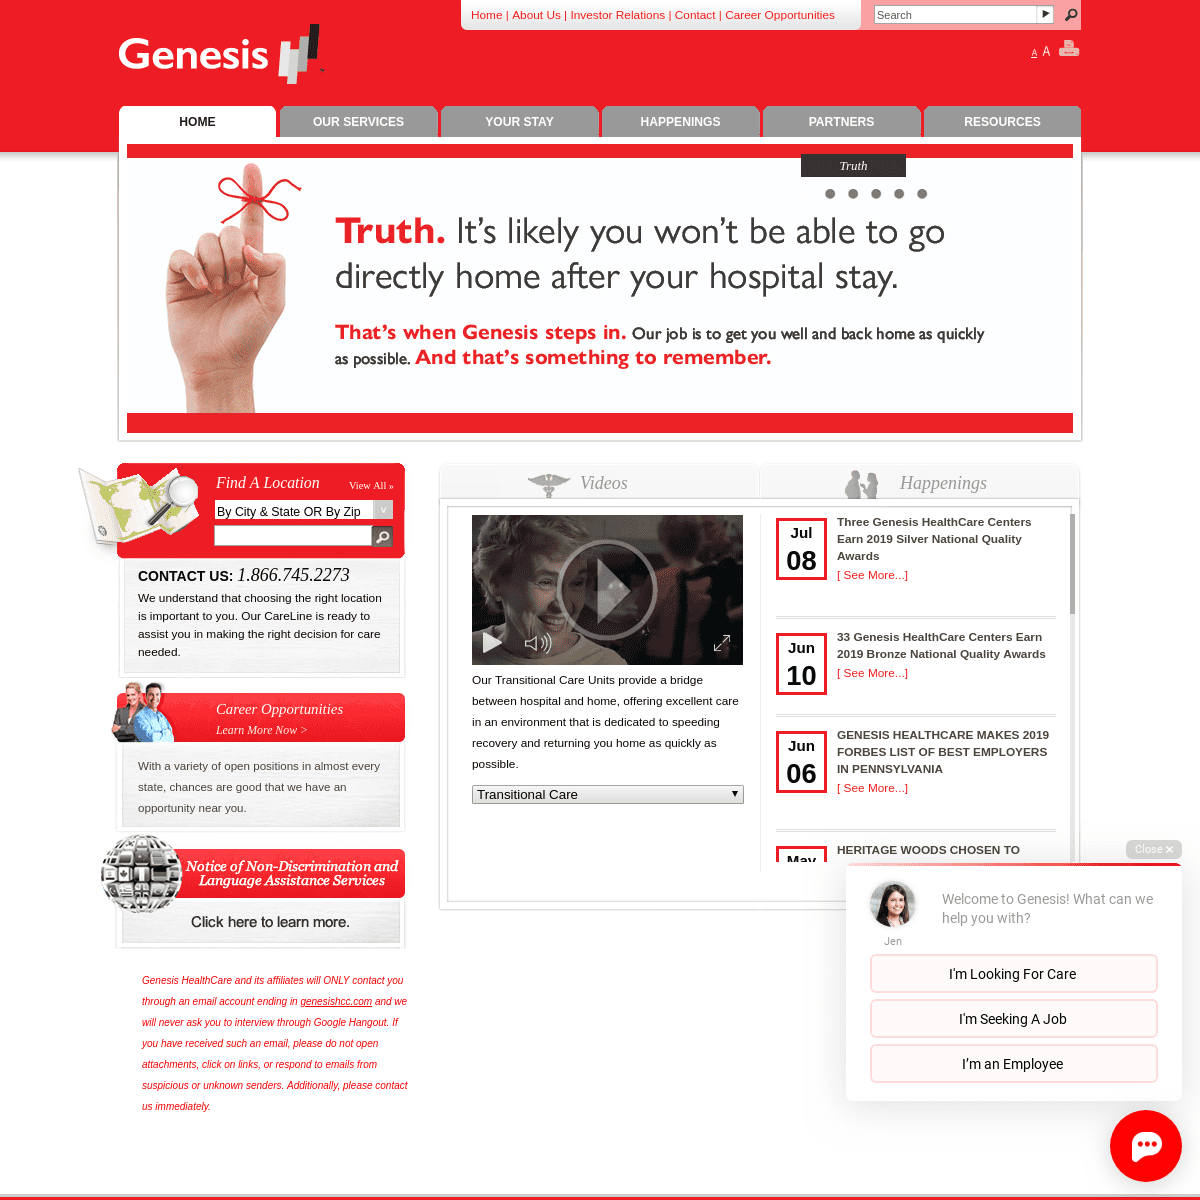 A complete backup of genesishcc.com